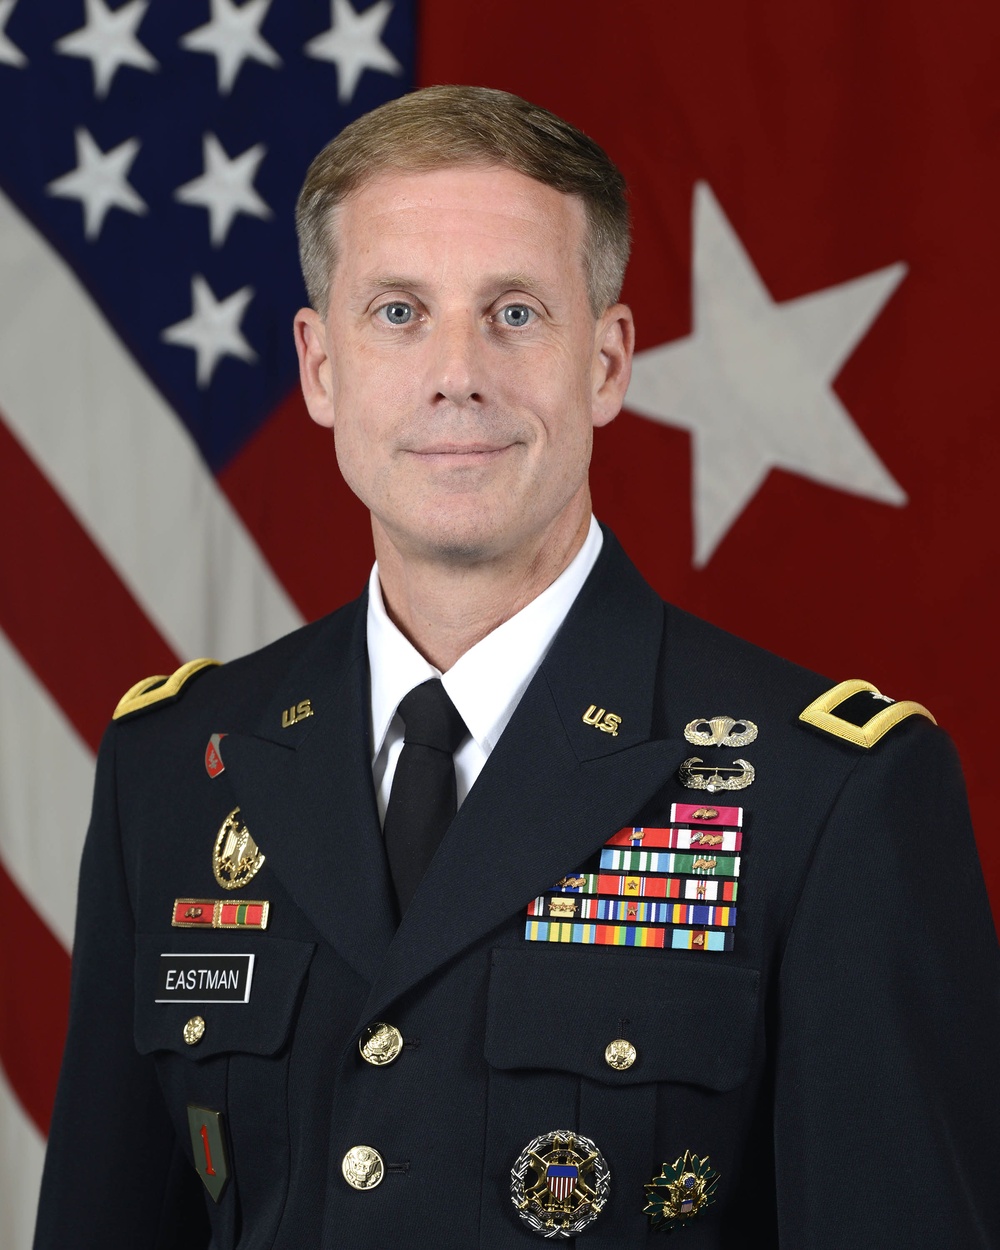 Brig. Gen. Michael R. Eastman